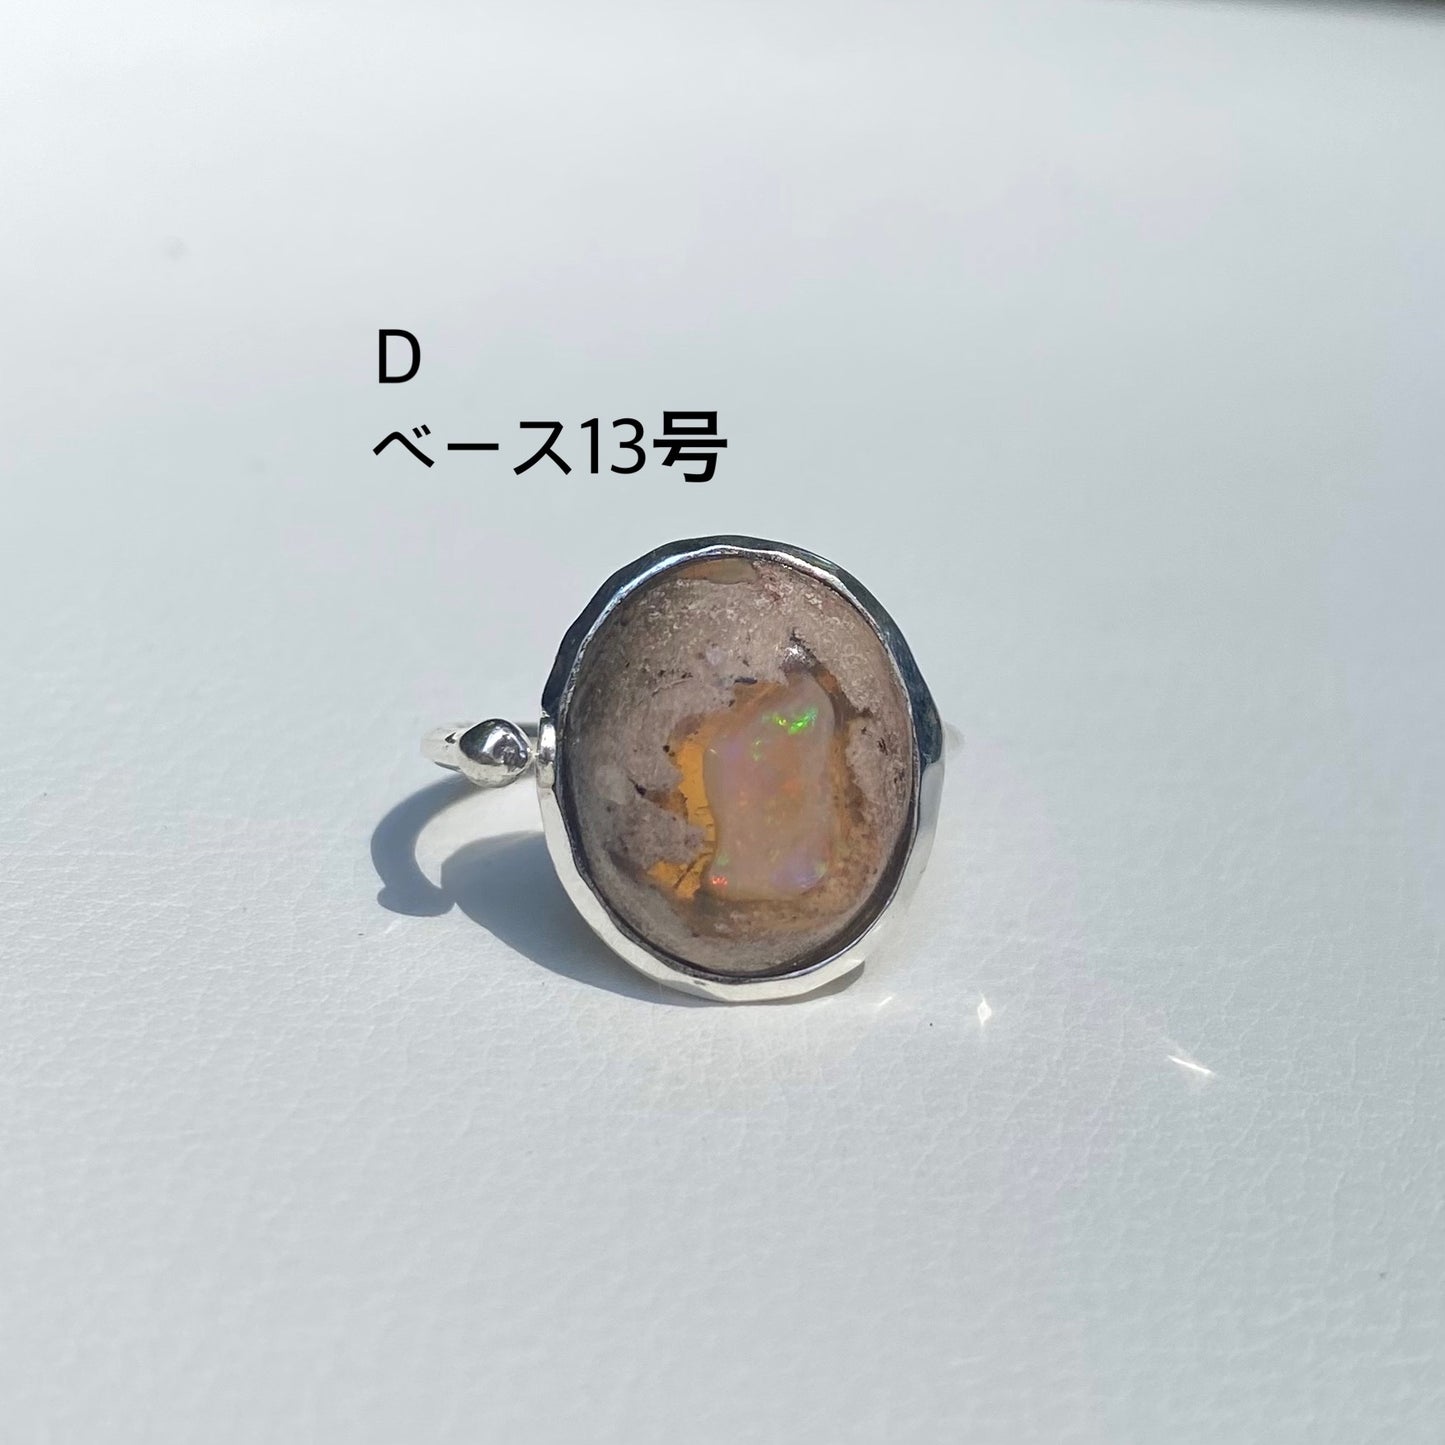 Cantera opal ring